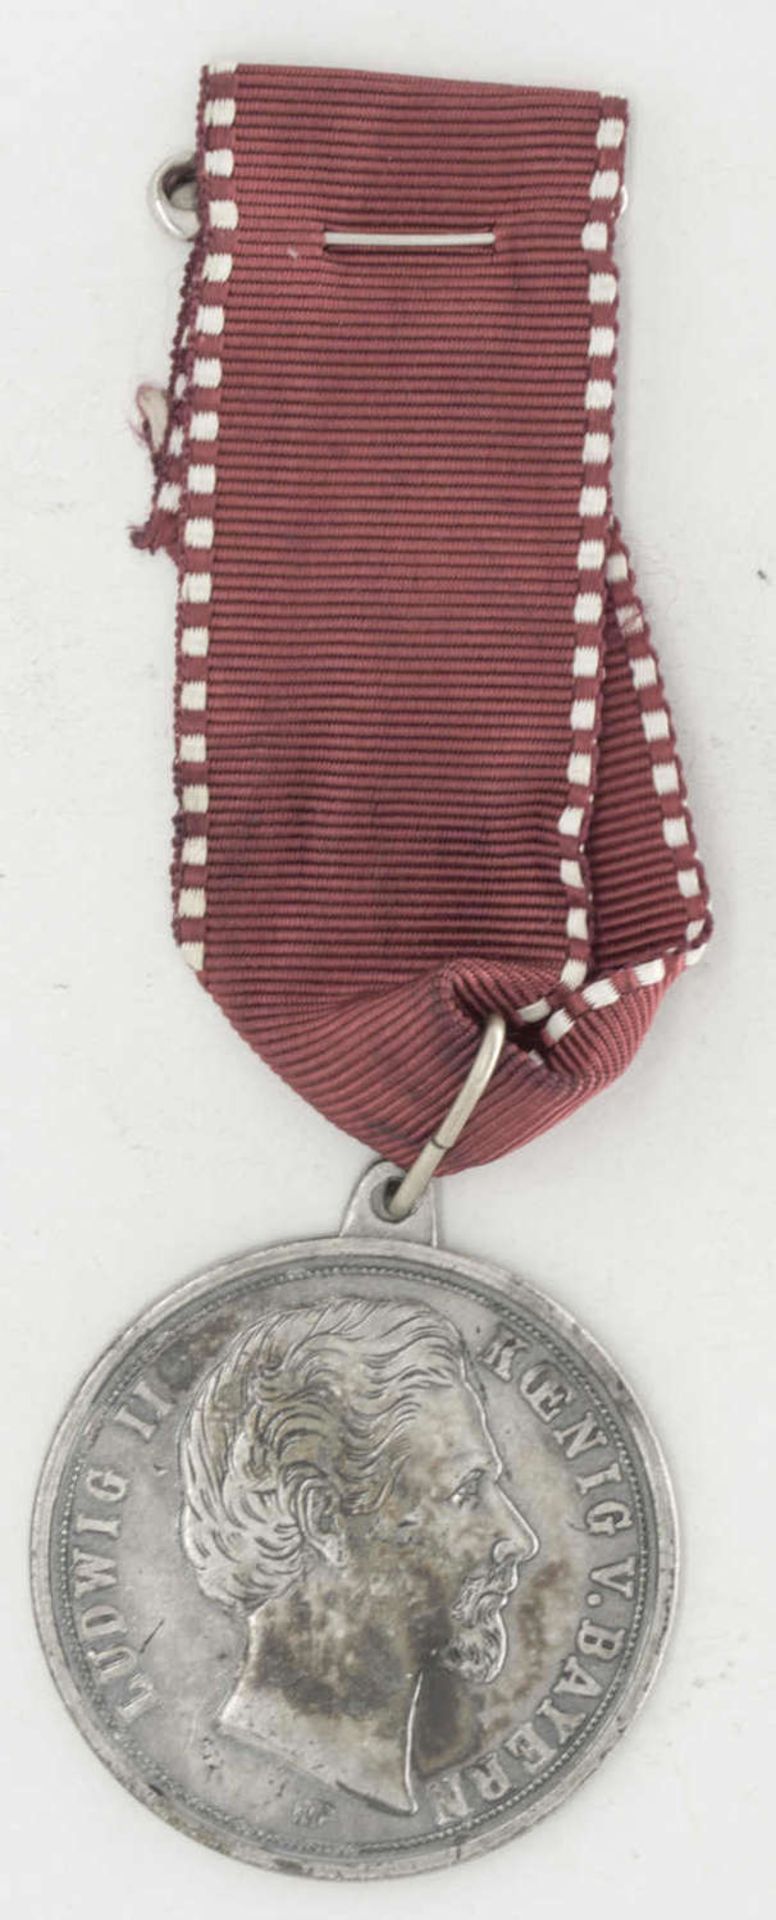 Bayern, Medaille Ludwig II. König von Bayern am Band. Av: Büste Ludwig II. nach rechts. Rv. 25. 8.